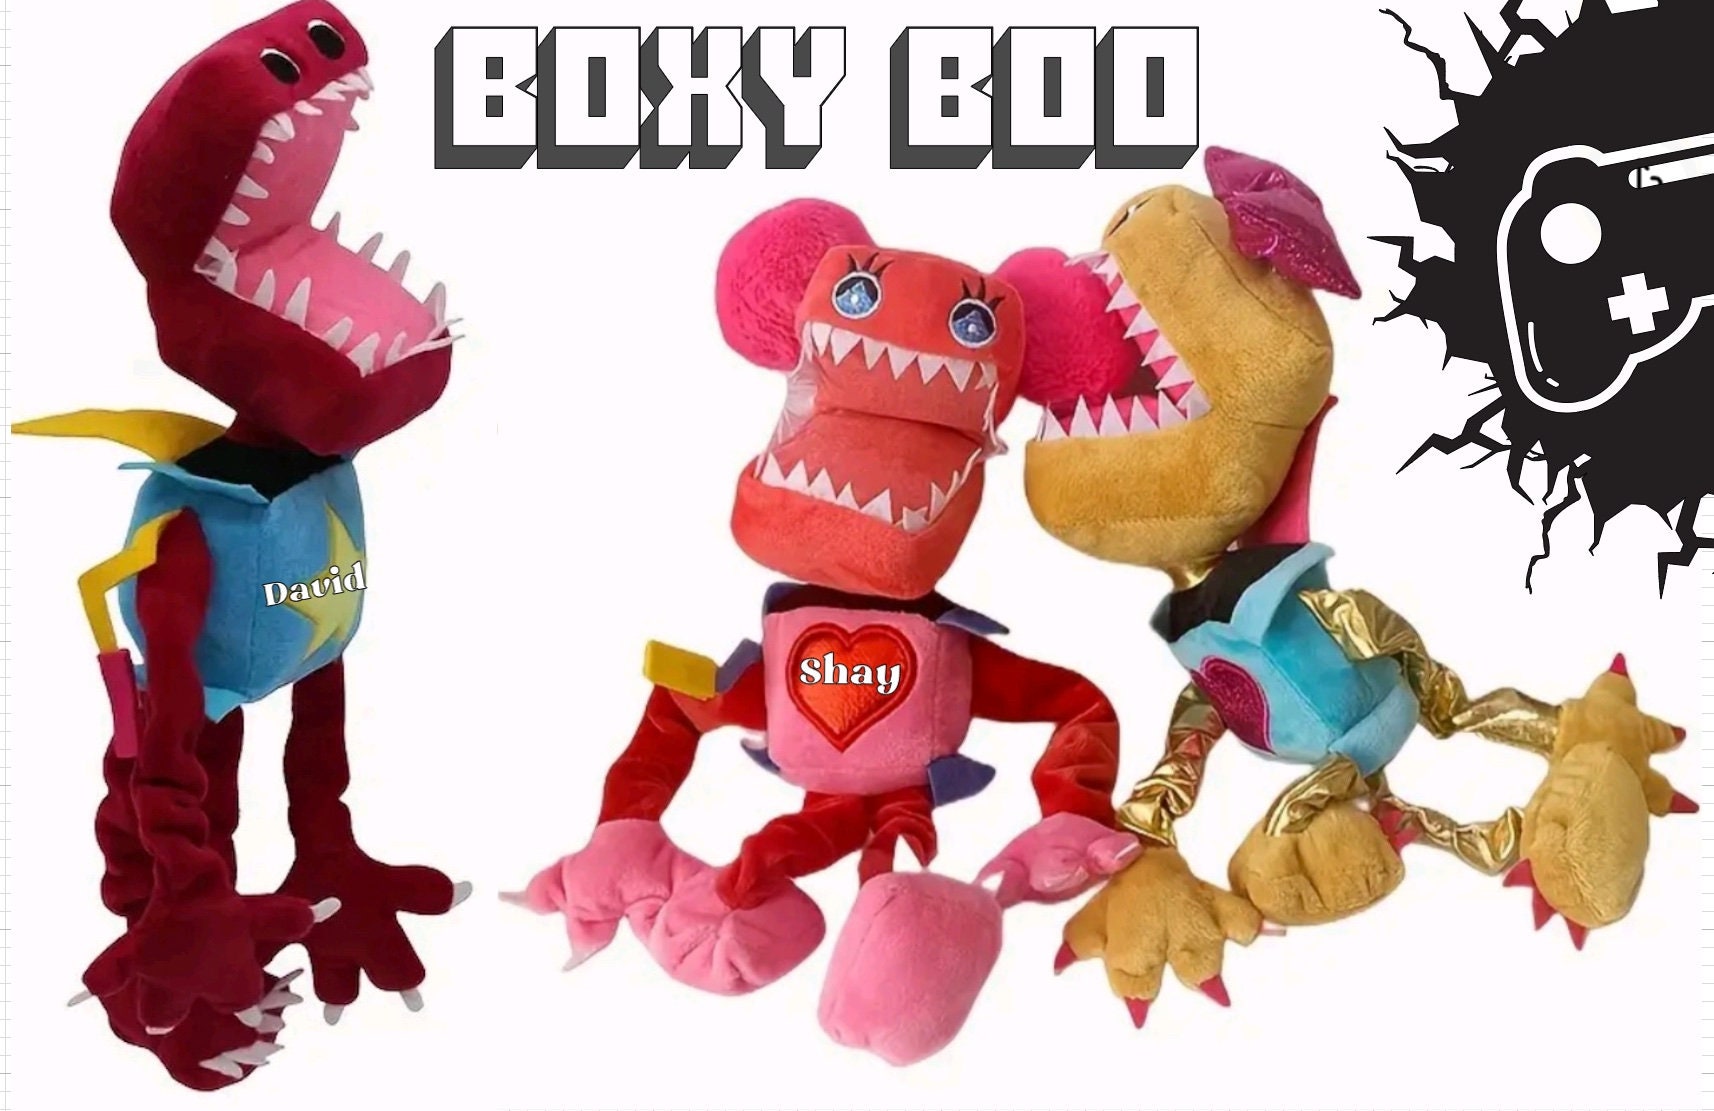 Boxy Boo plush, the Poppy Playtime Chapter 3 plush